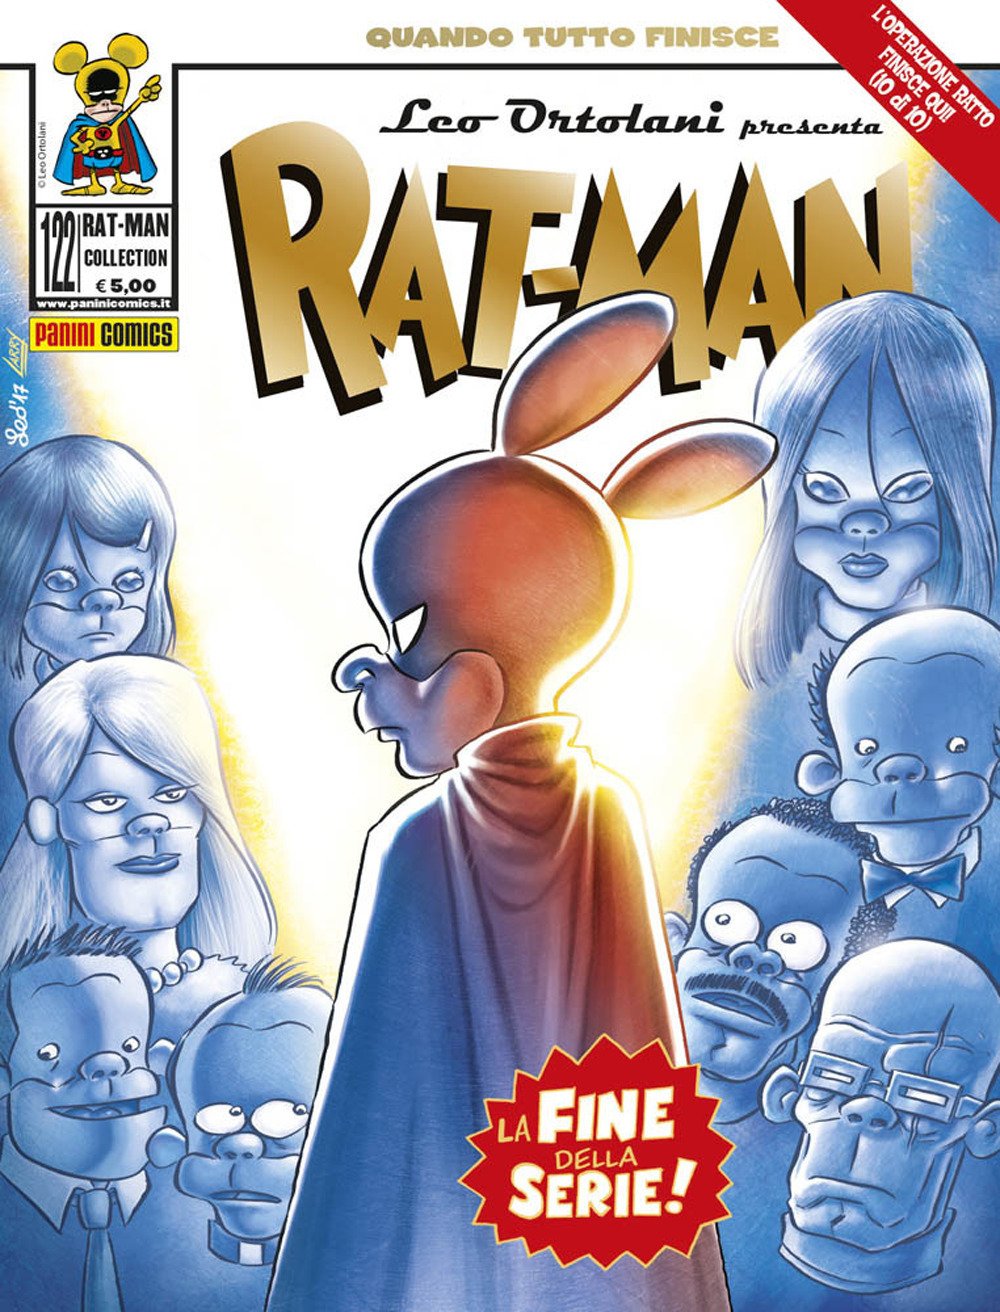 Un Rat-Man Day per salutare un eroe!